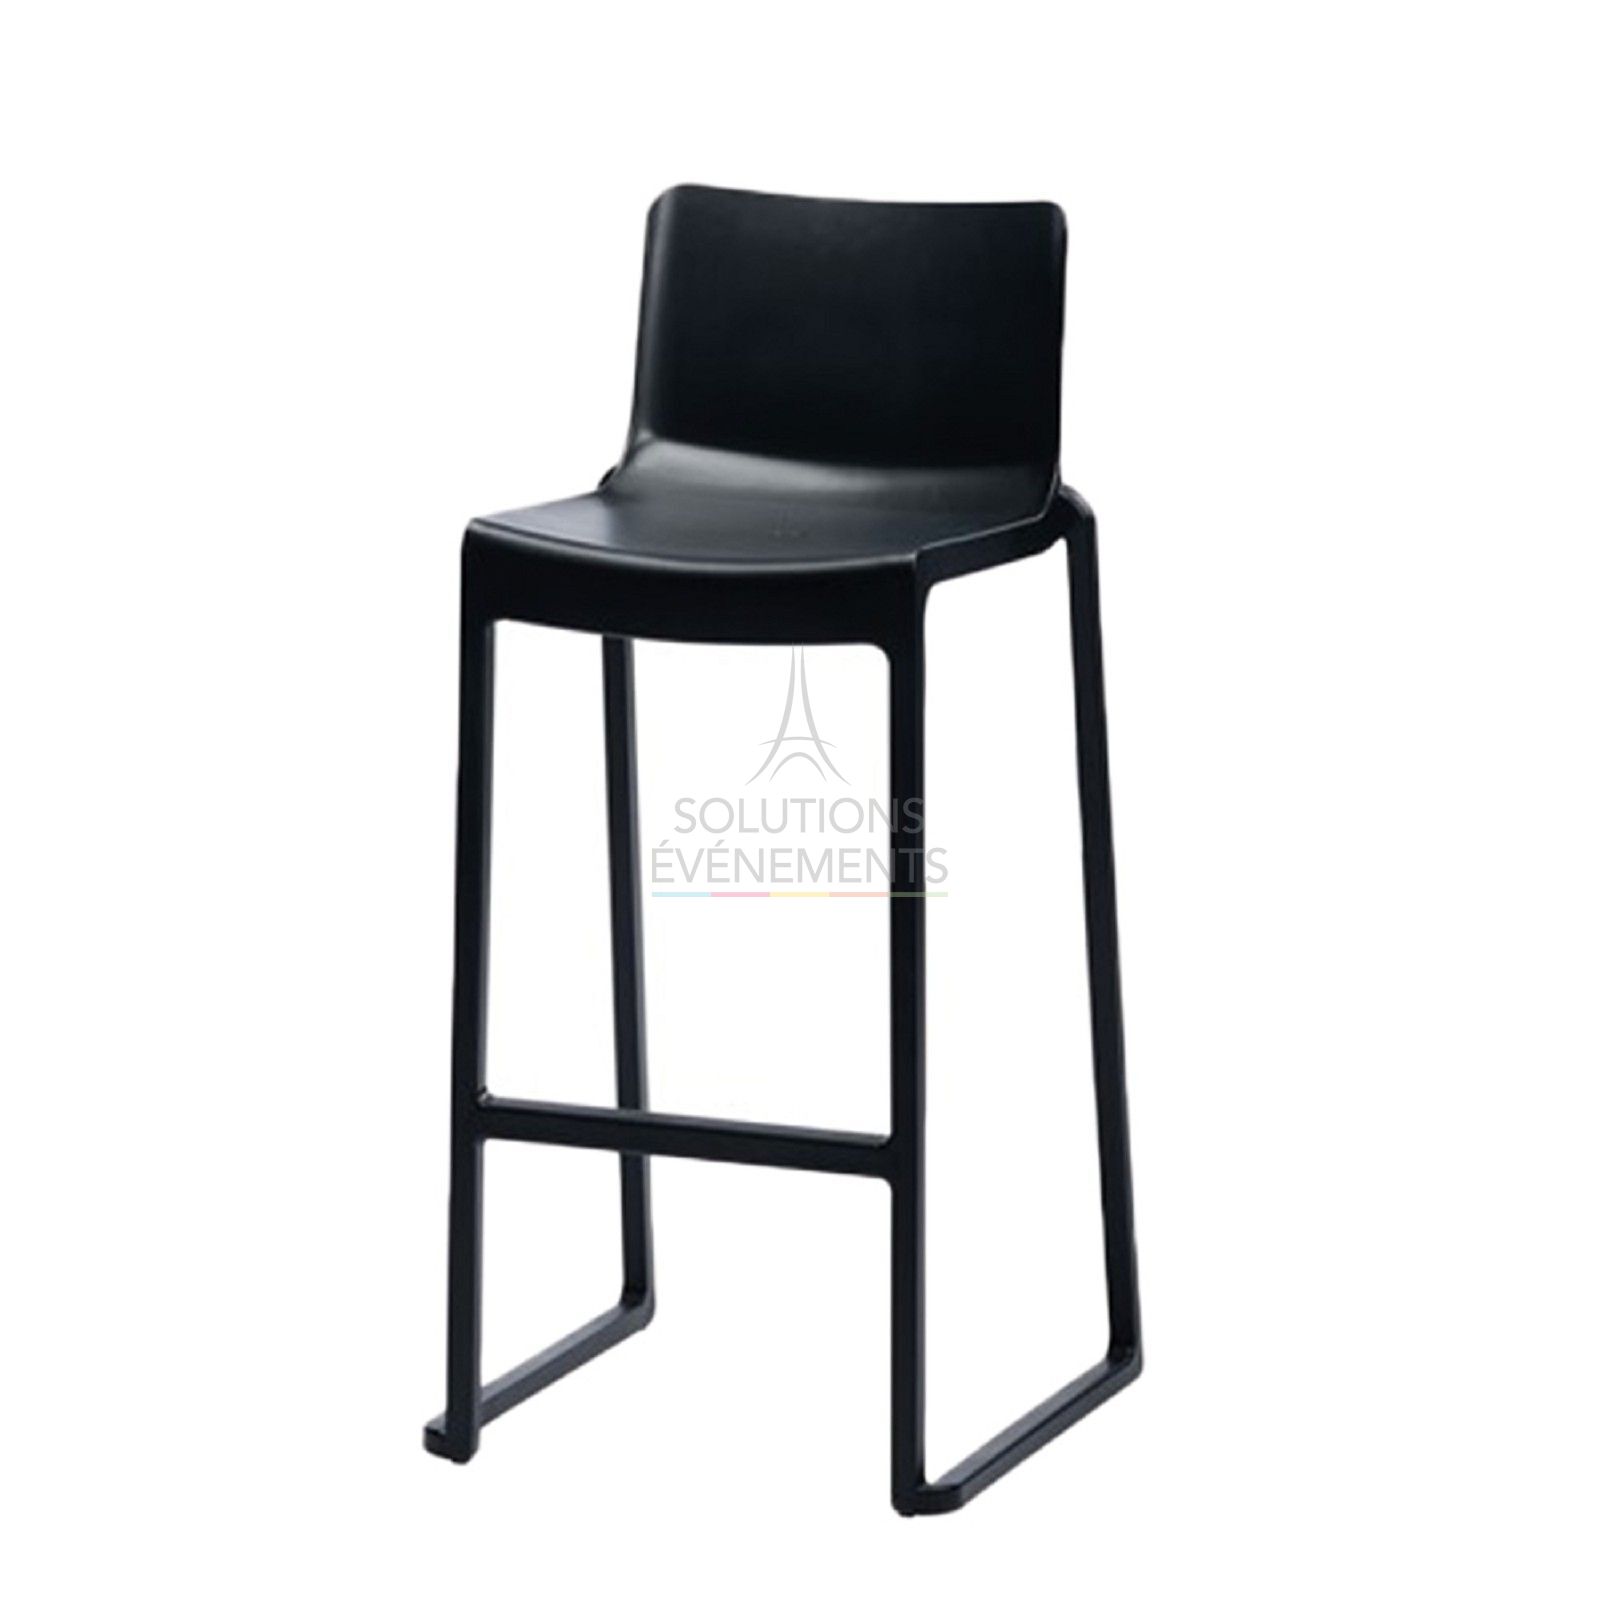 Rental black high chair eco-responsible design